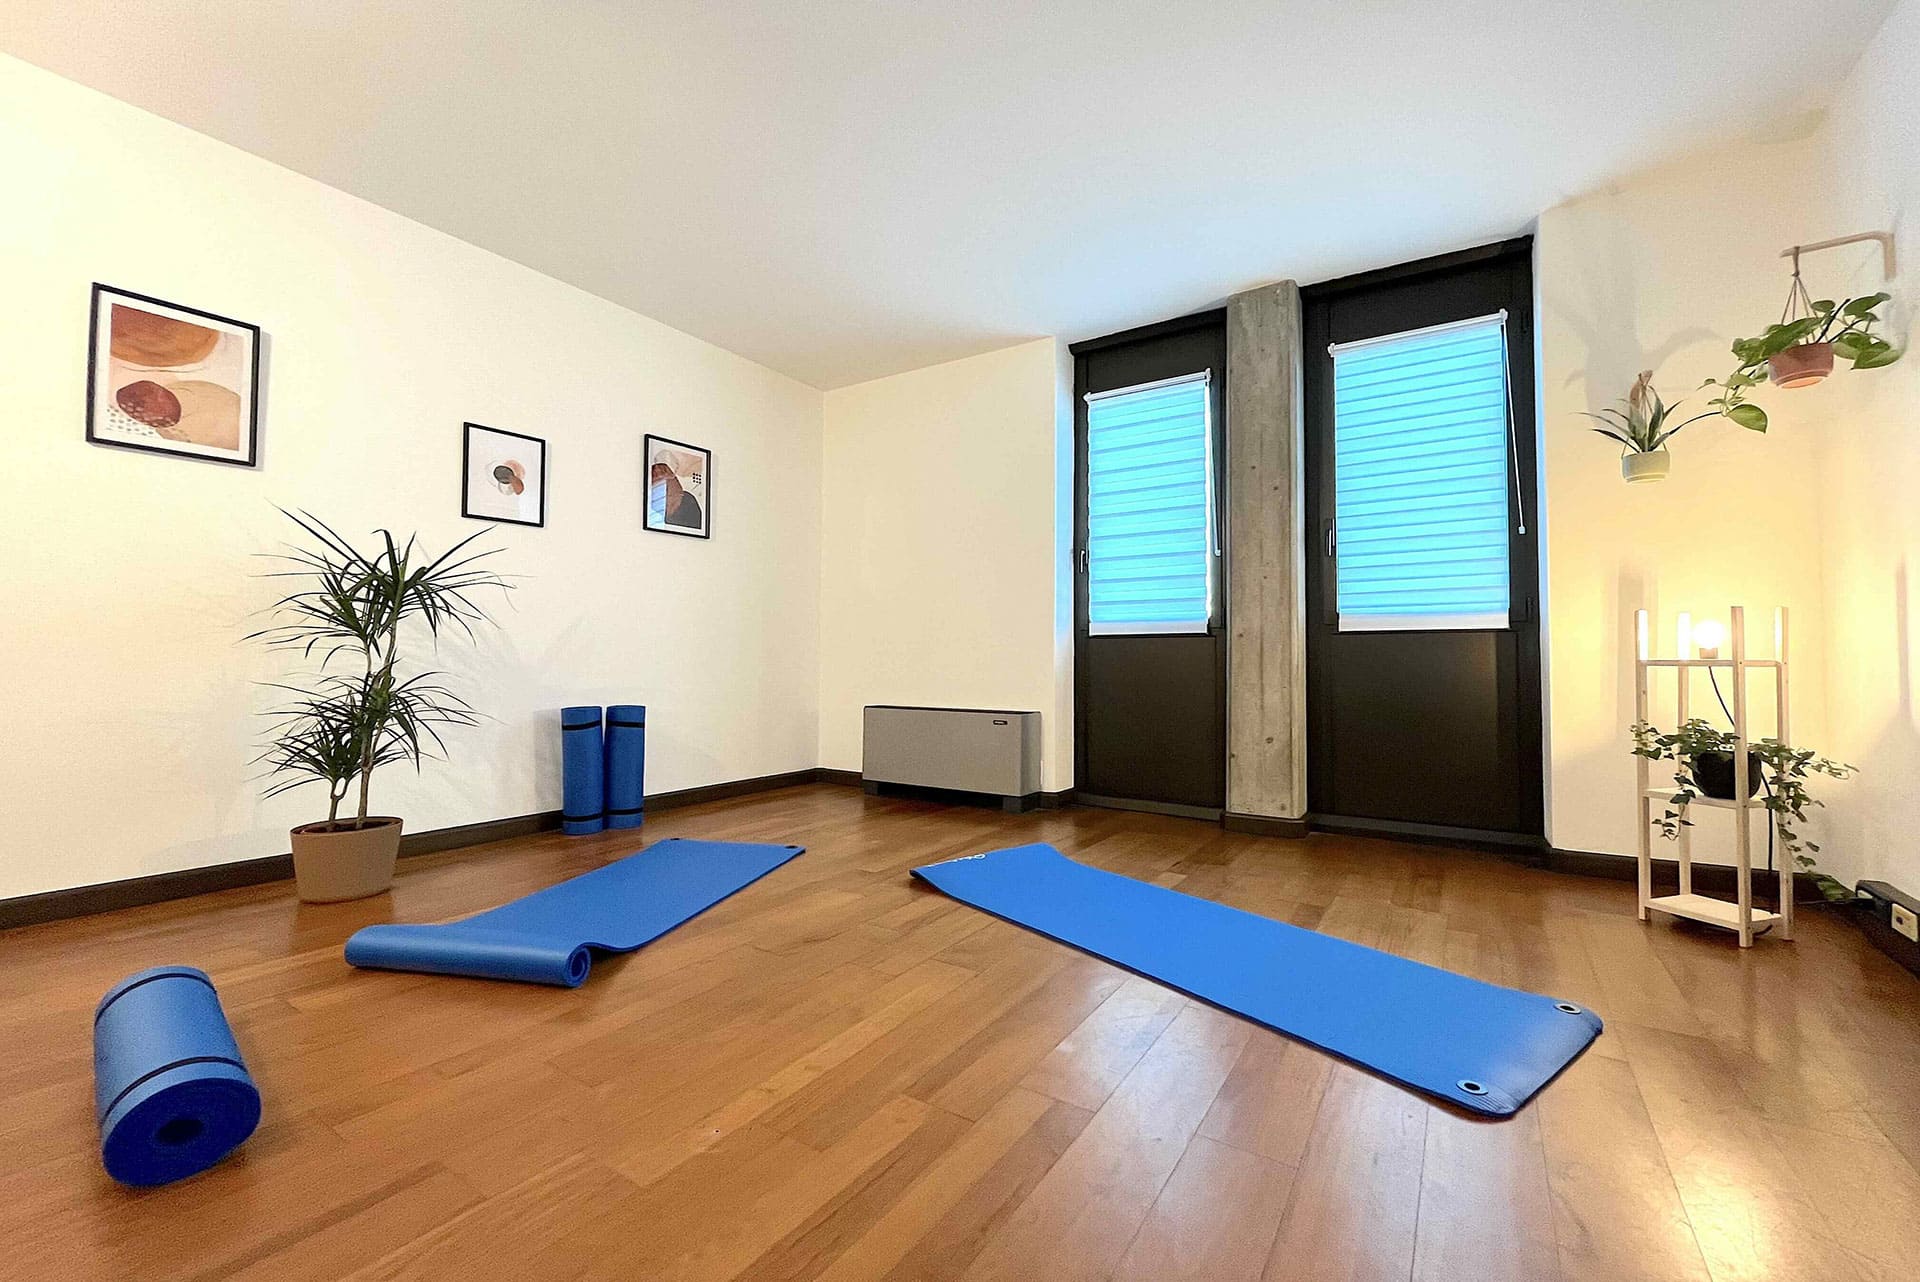 Studio 5 in affitto - sala yoga